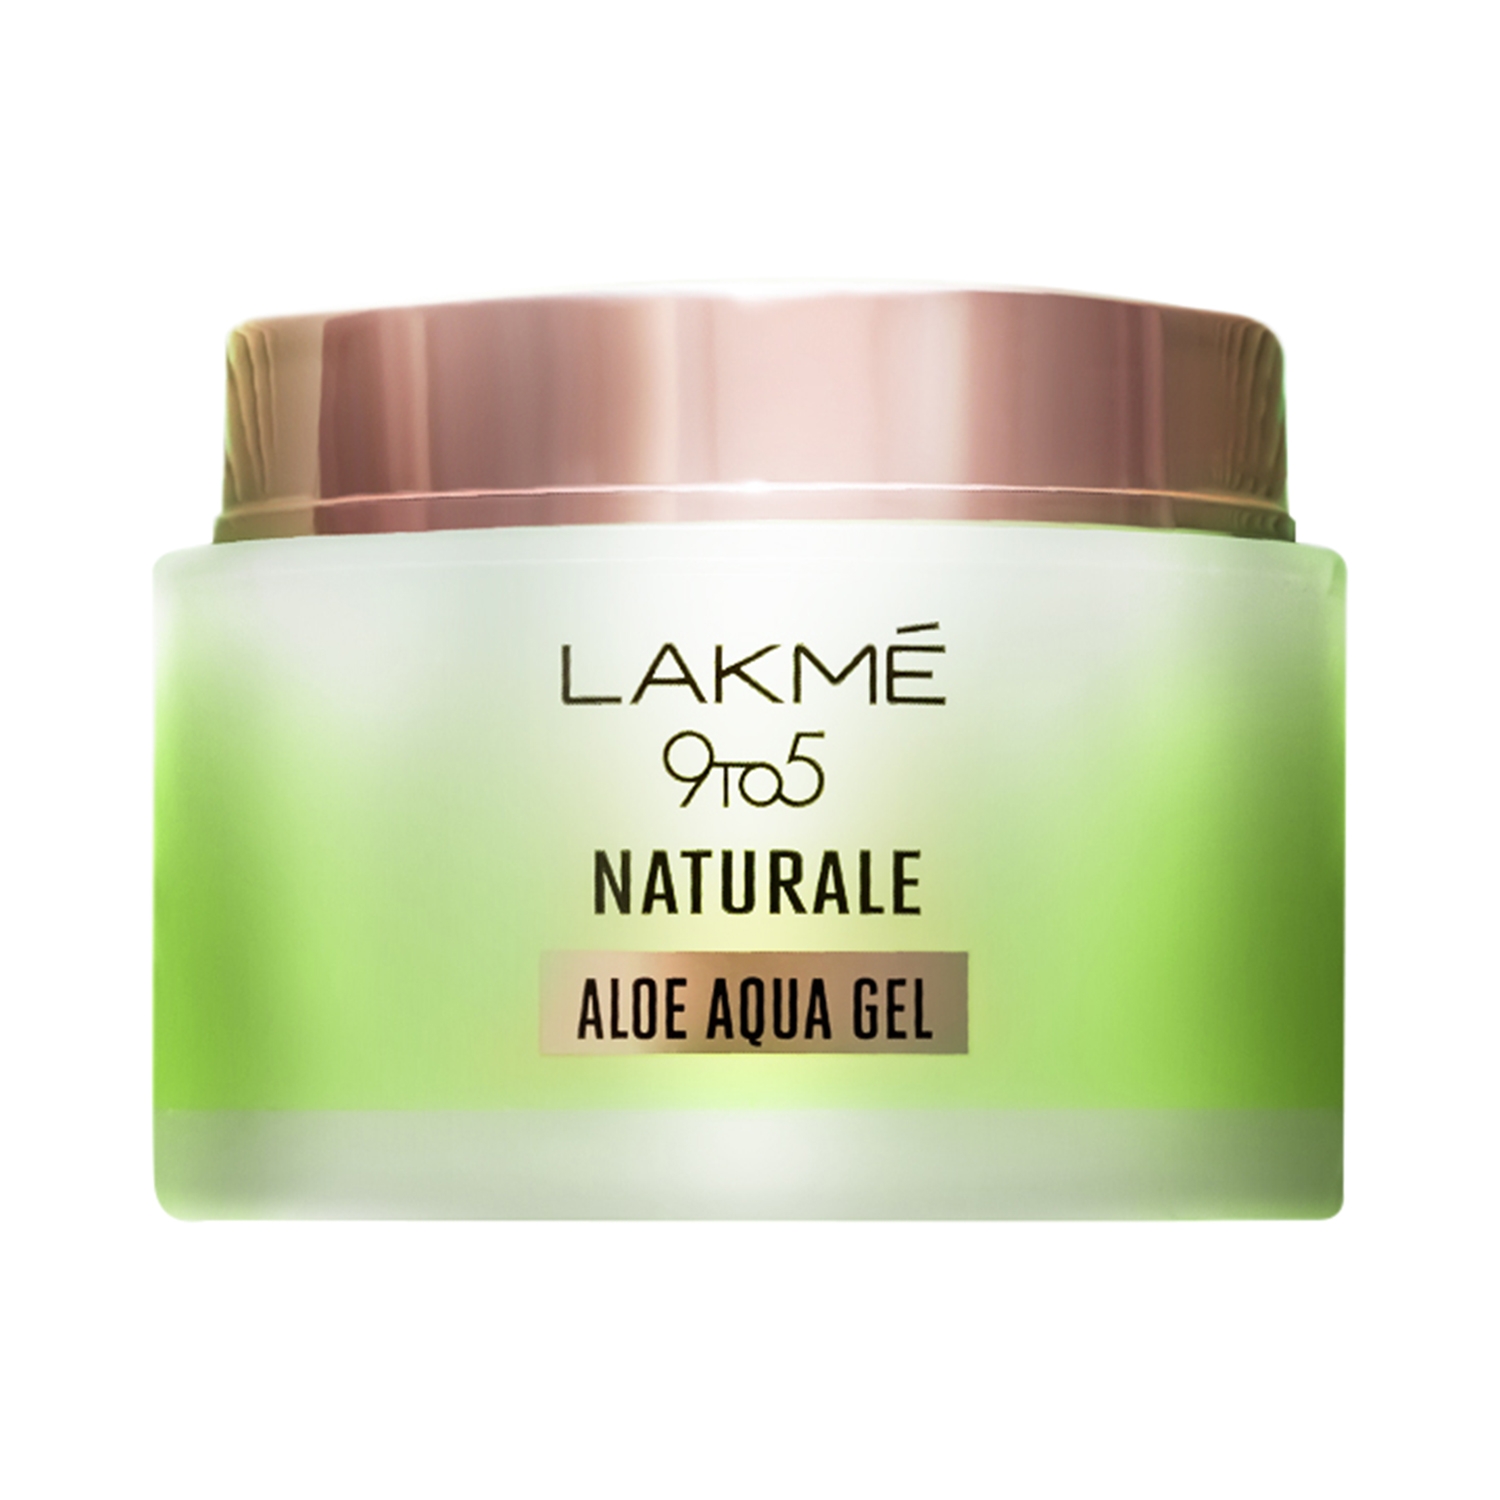 Lakme | Lakme 9To5 Natural Aloe Aqua Gel (50g)